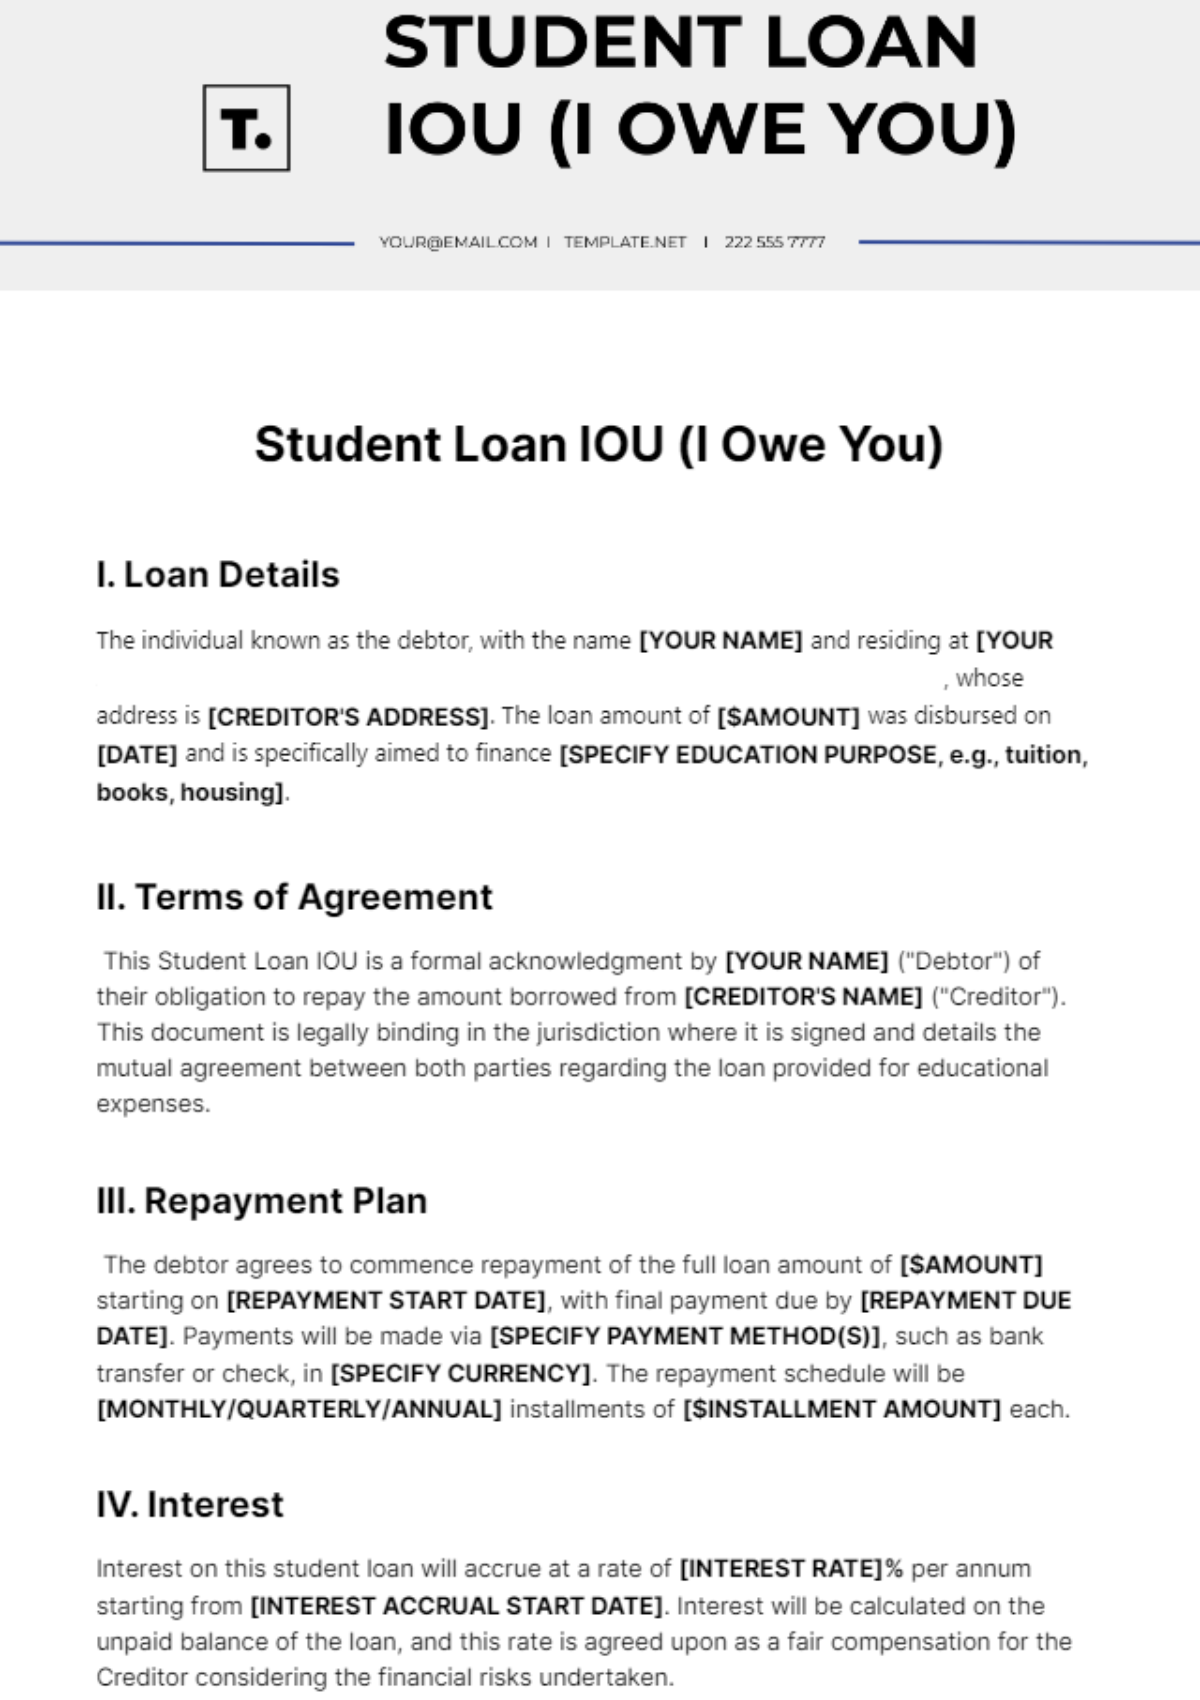 Student Loan IOU Template